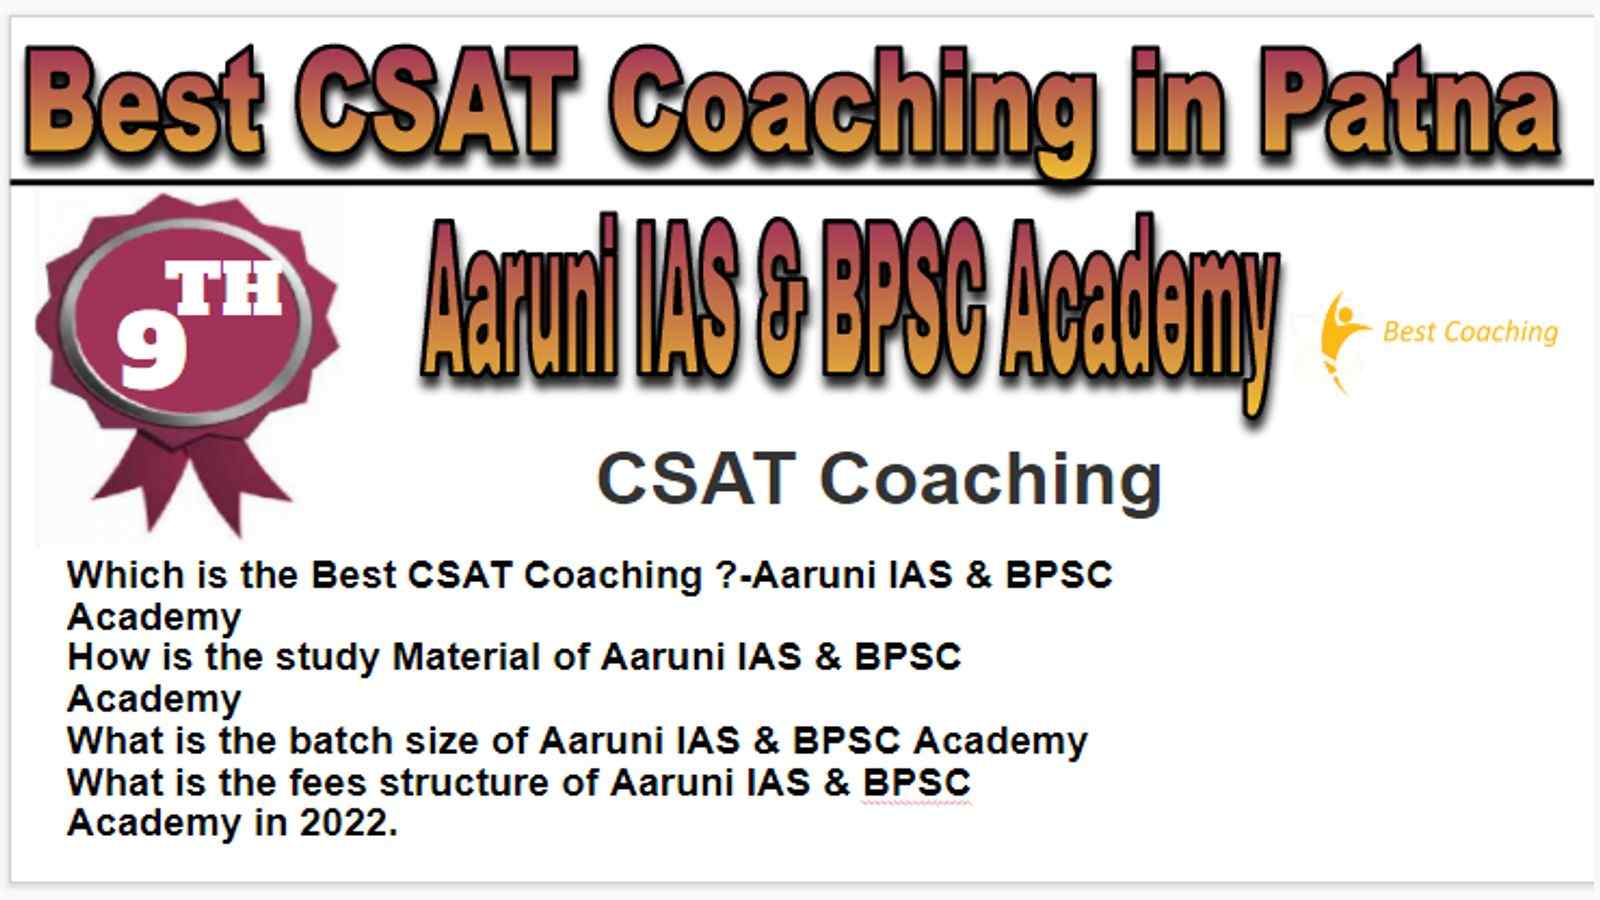 Rank 9 Best CSAT Coaching in Patna